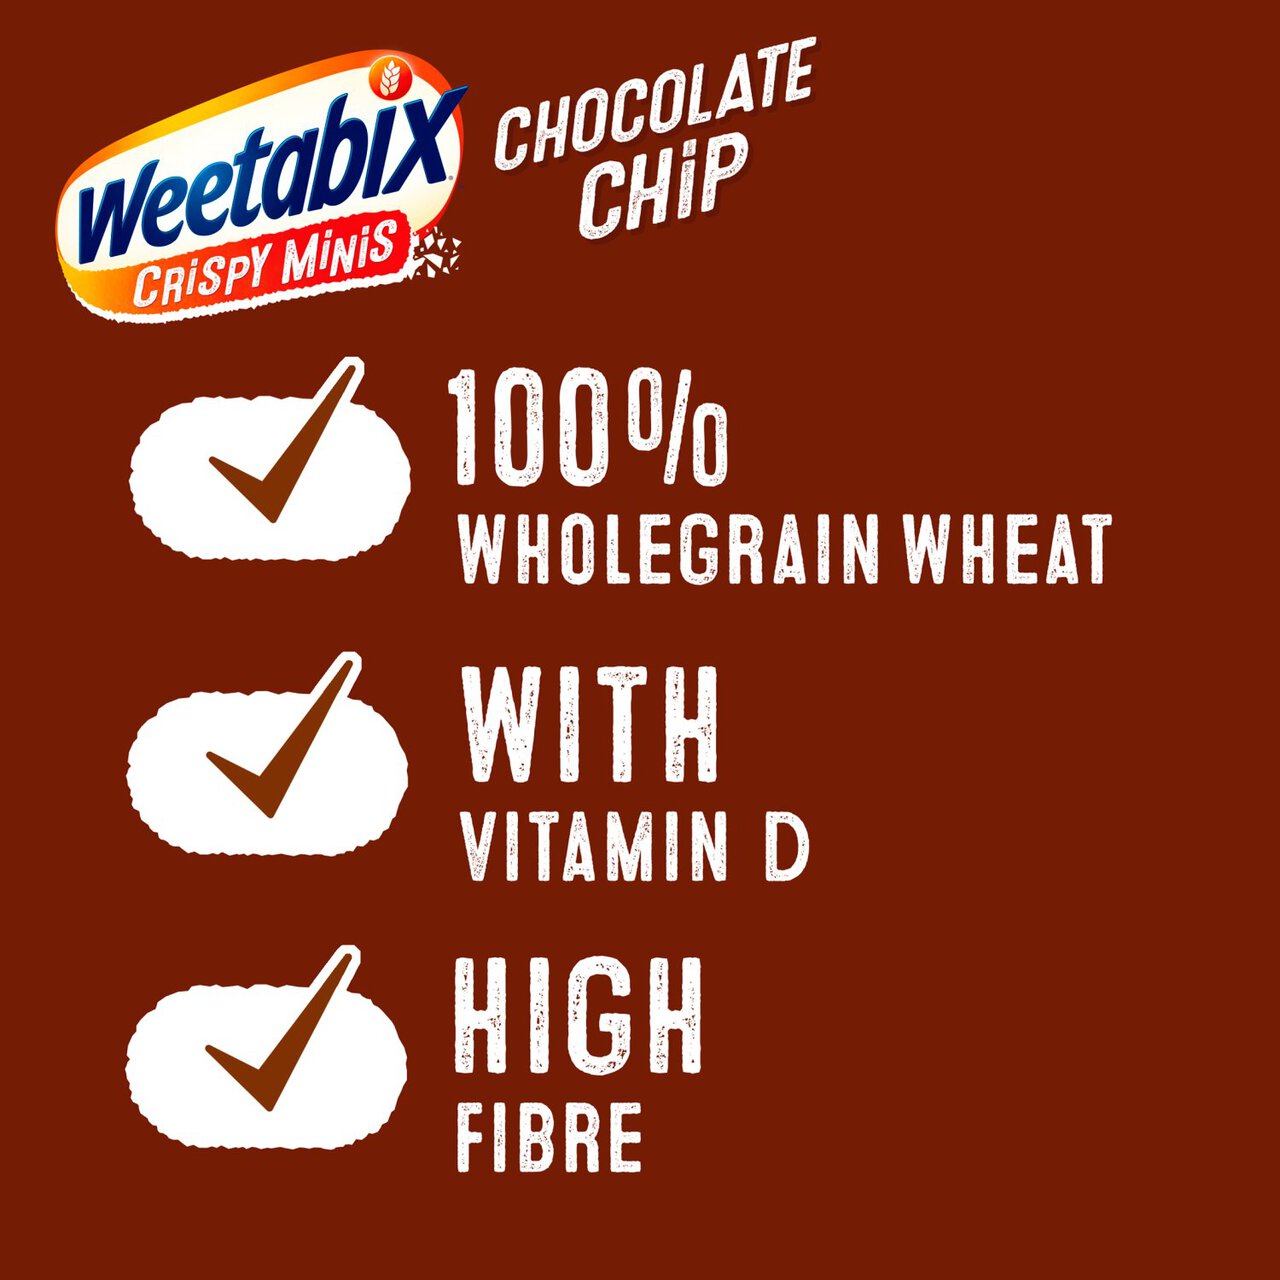 Weetabix Crispy Minis Chocolate Chip Cereal 600g